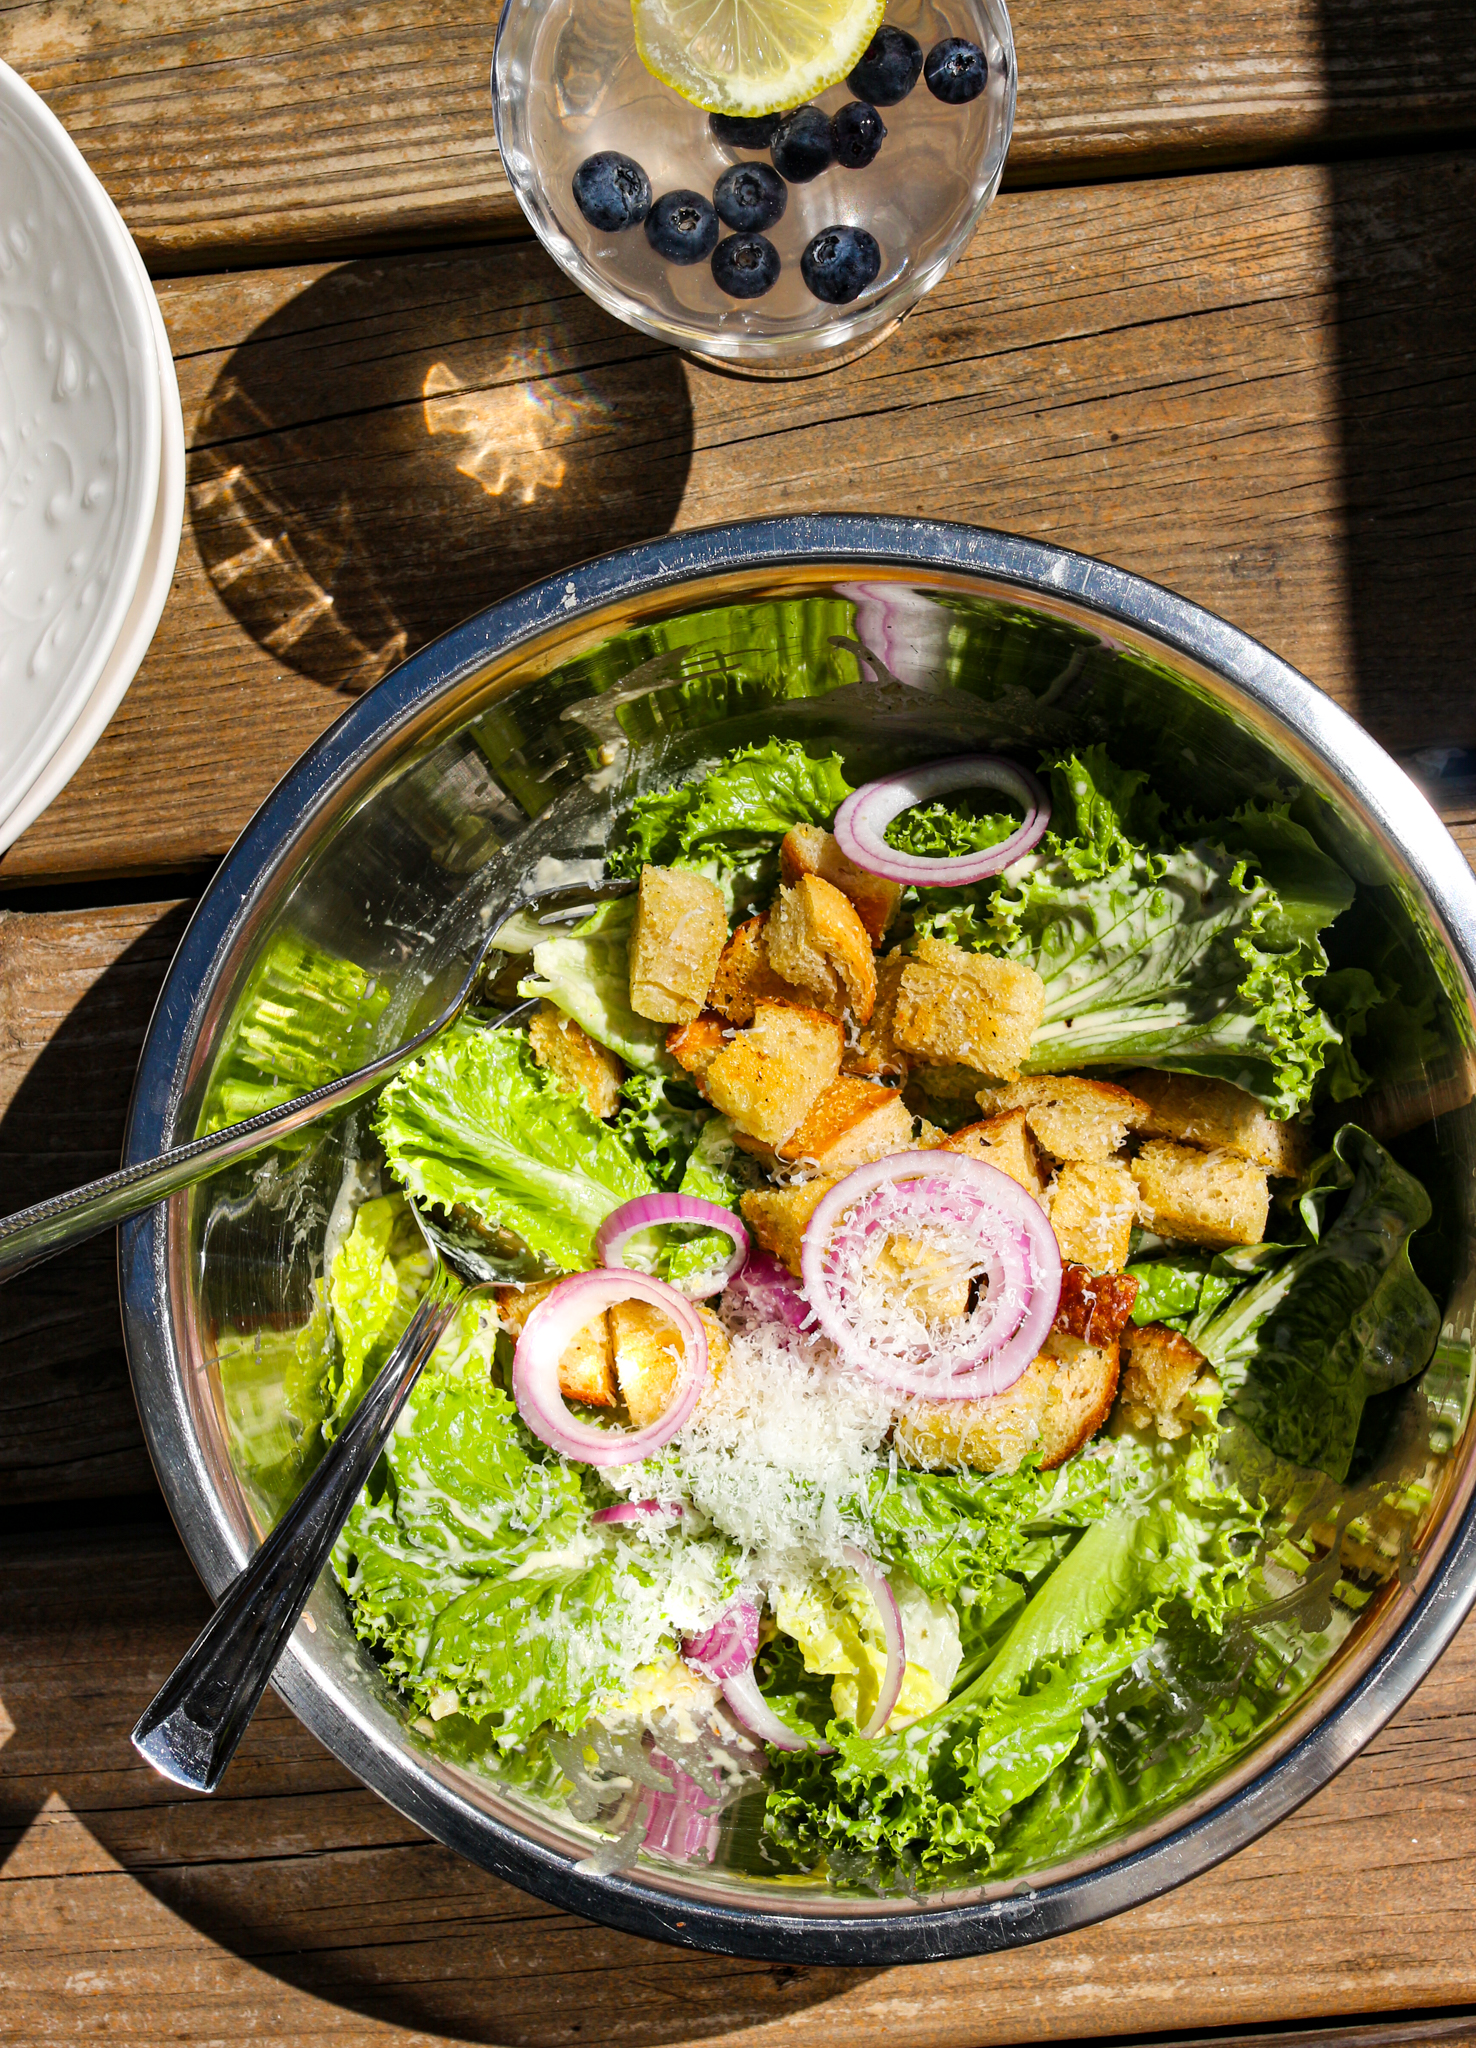 Vegan Caesar Salad with Garlicky Croutons